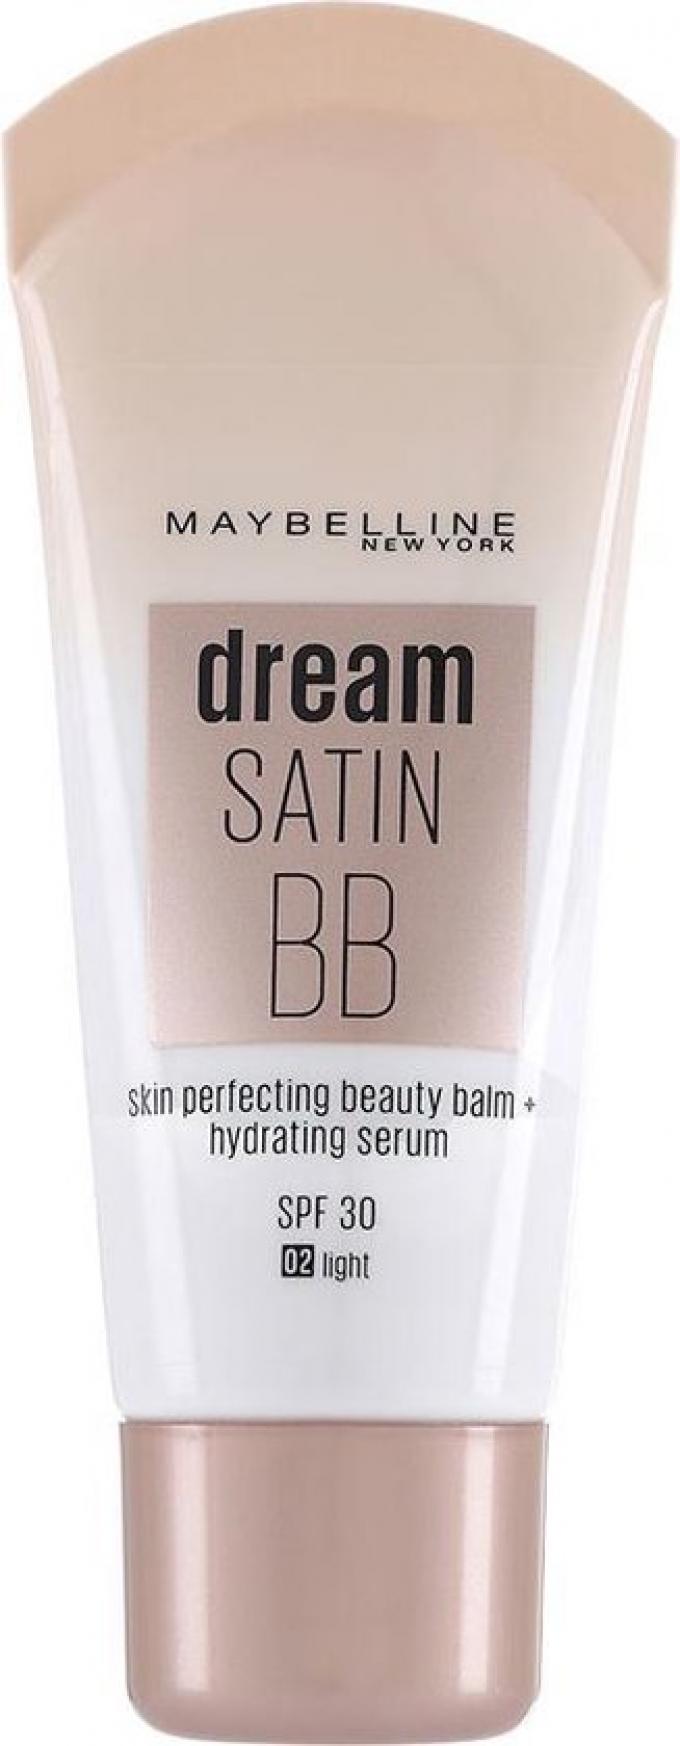 Dream Satin BB Cream van Maybelline